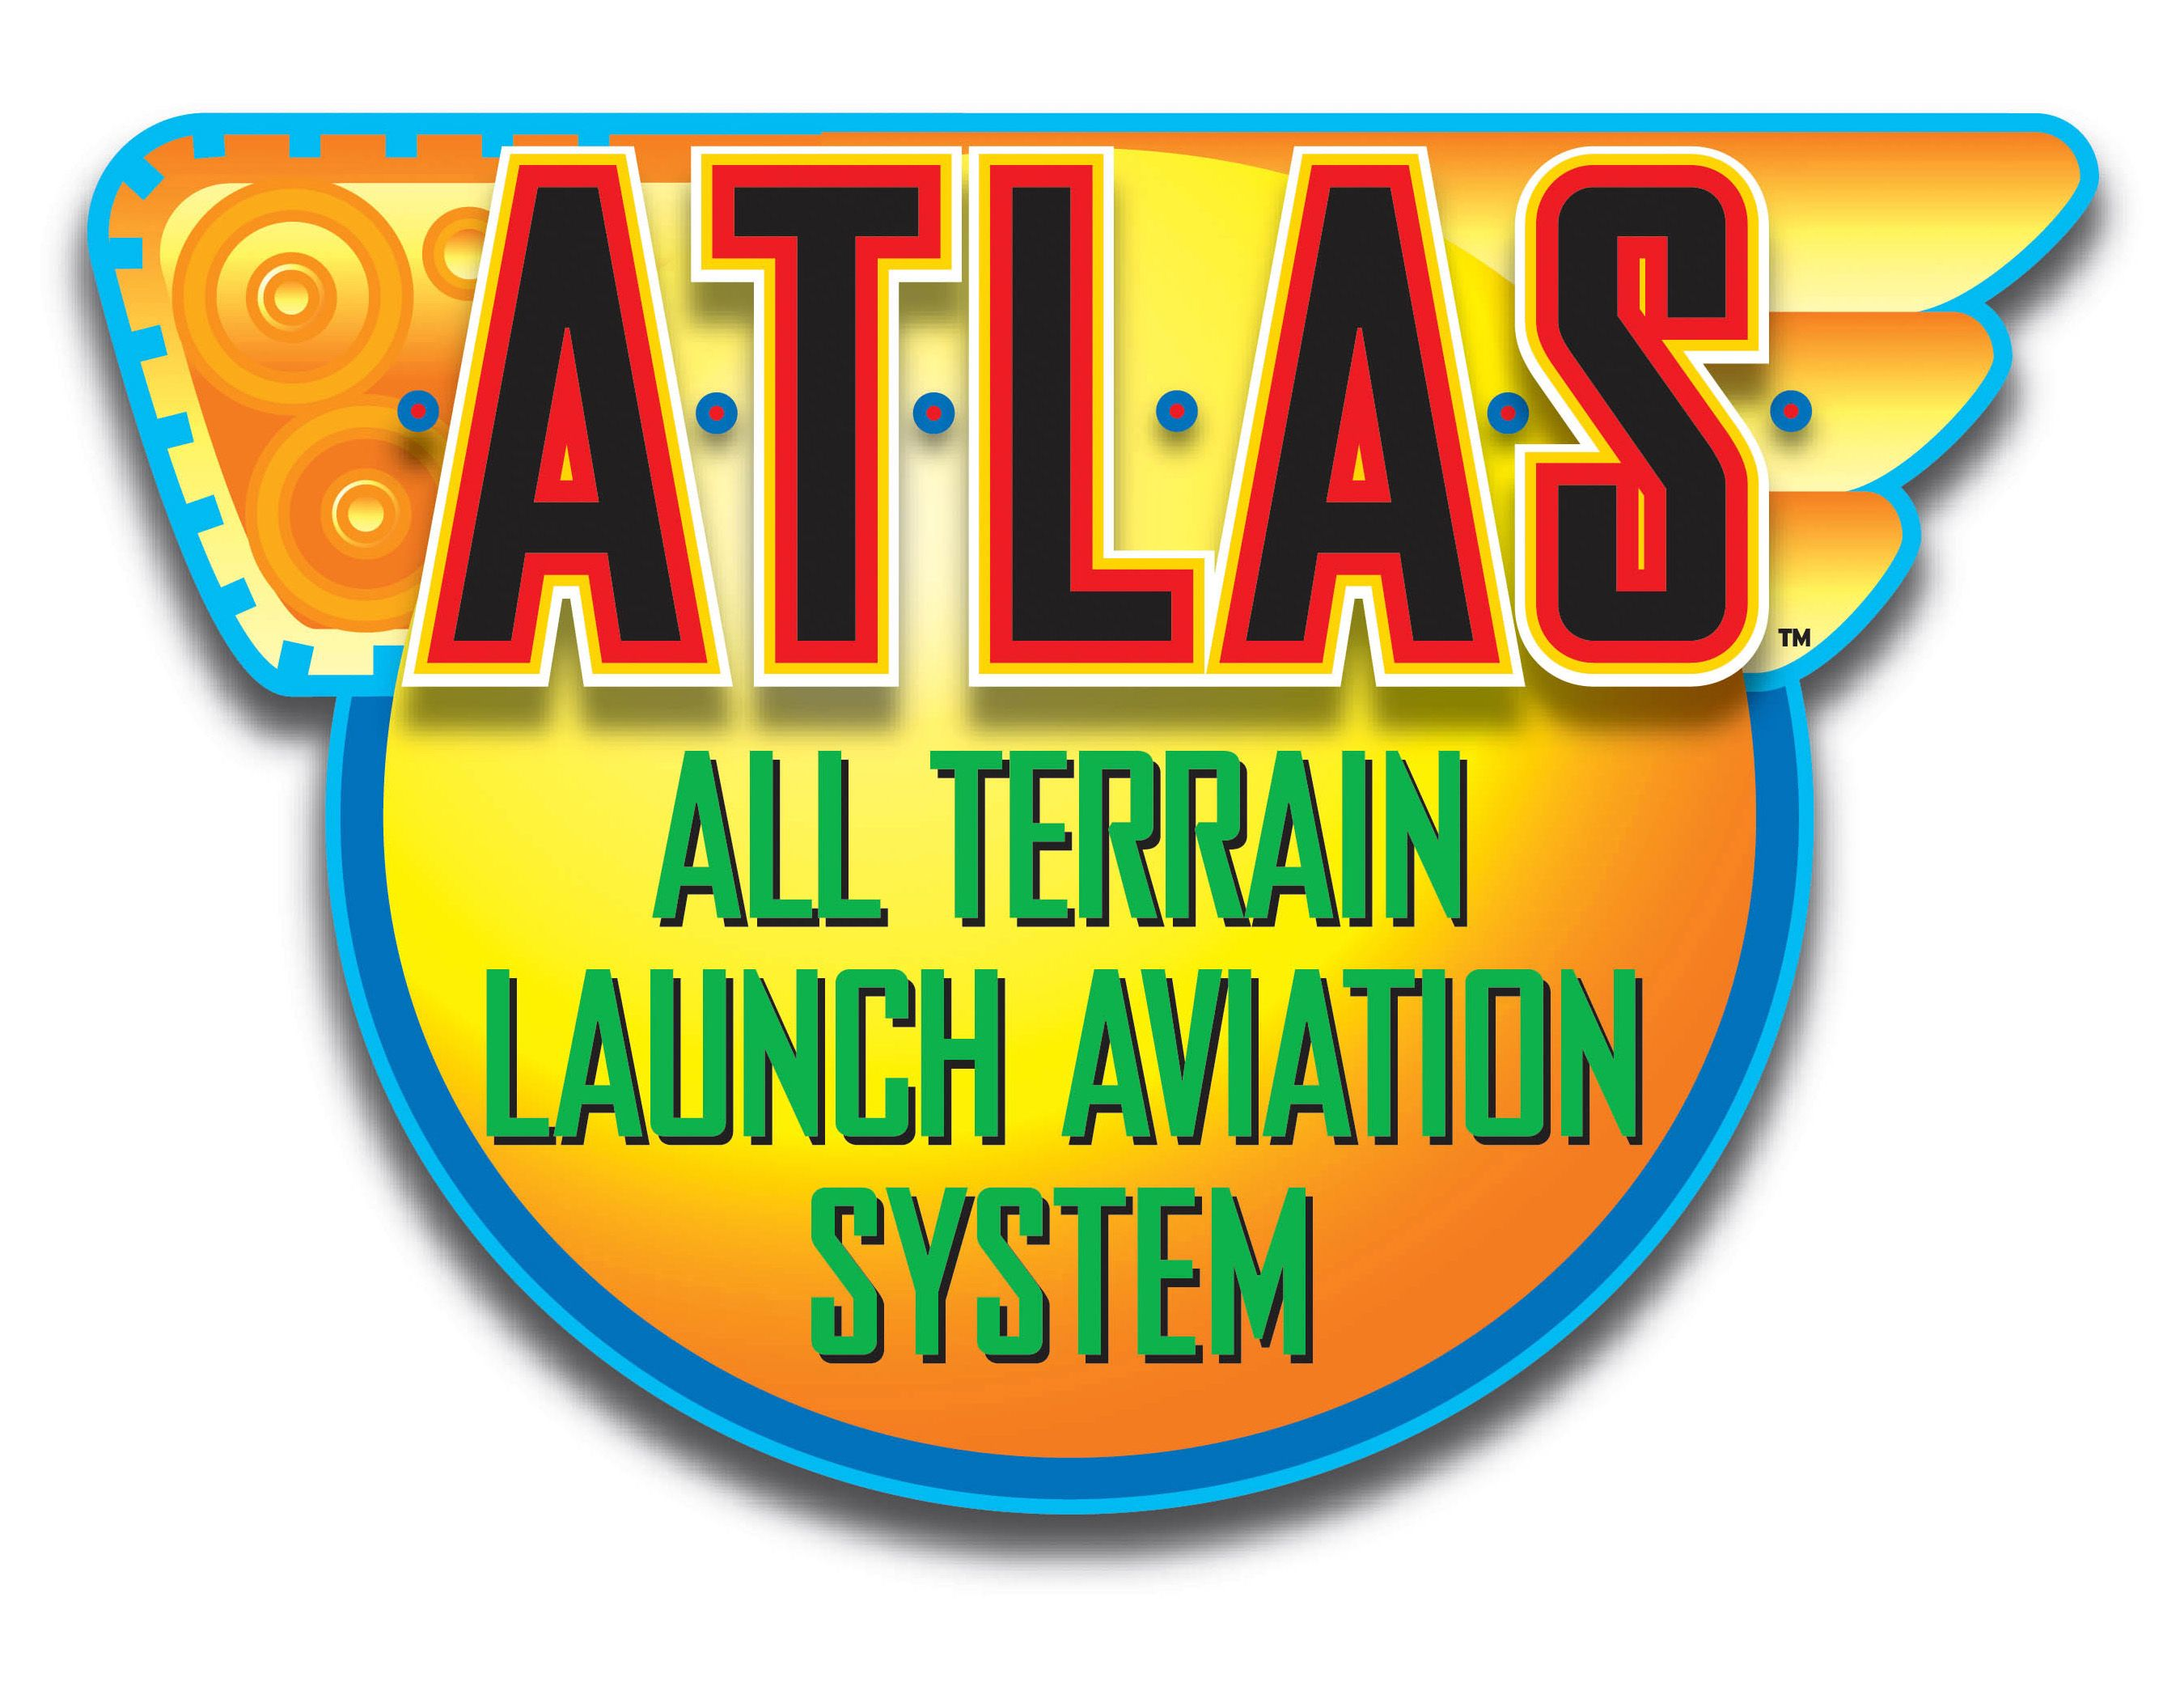  ATLAS ALL TERRAIN LAUNCH AVIATION SYSTEM